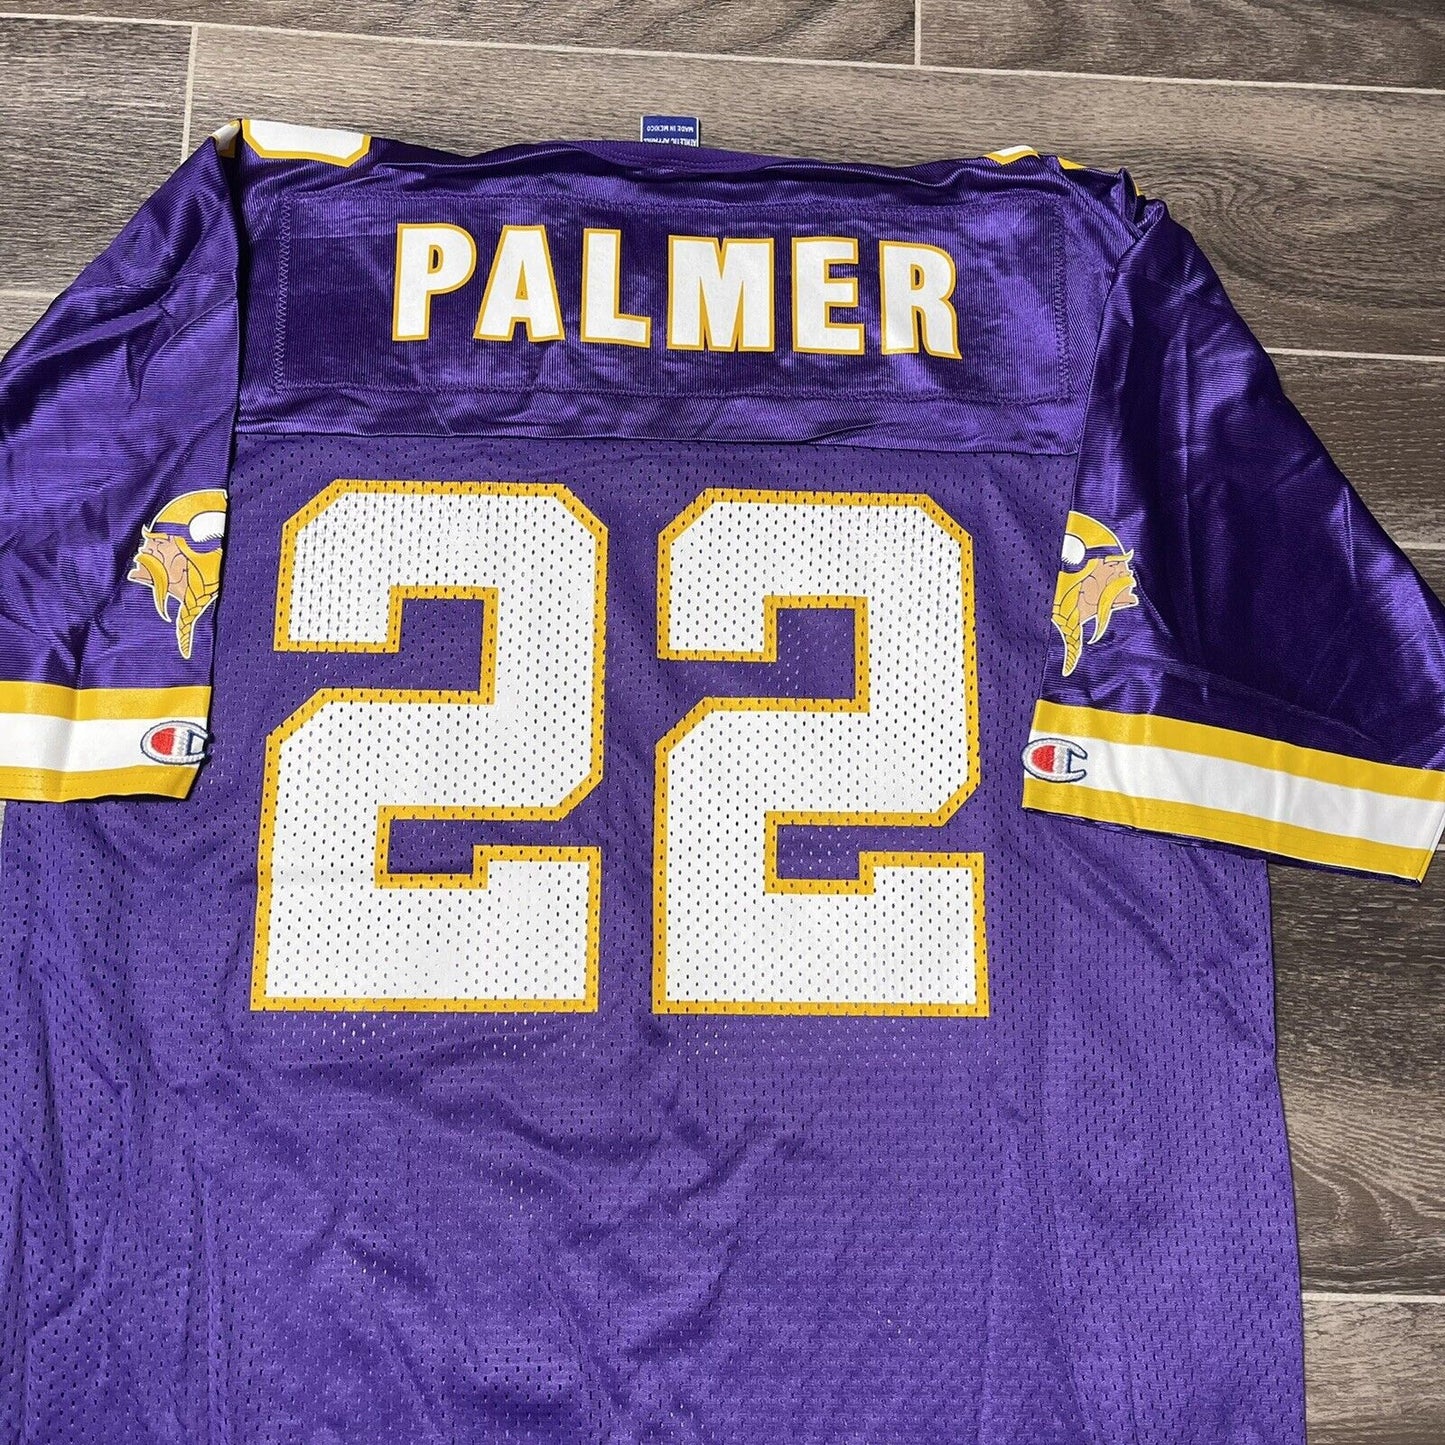 David Palmer #22 Minnesota Vikings Champion Jersey Excellent Condition Sz 44